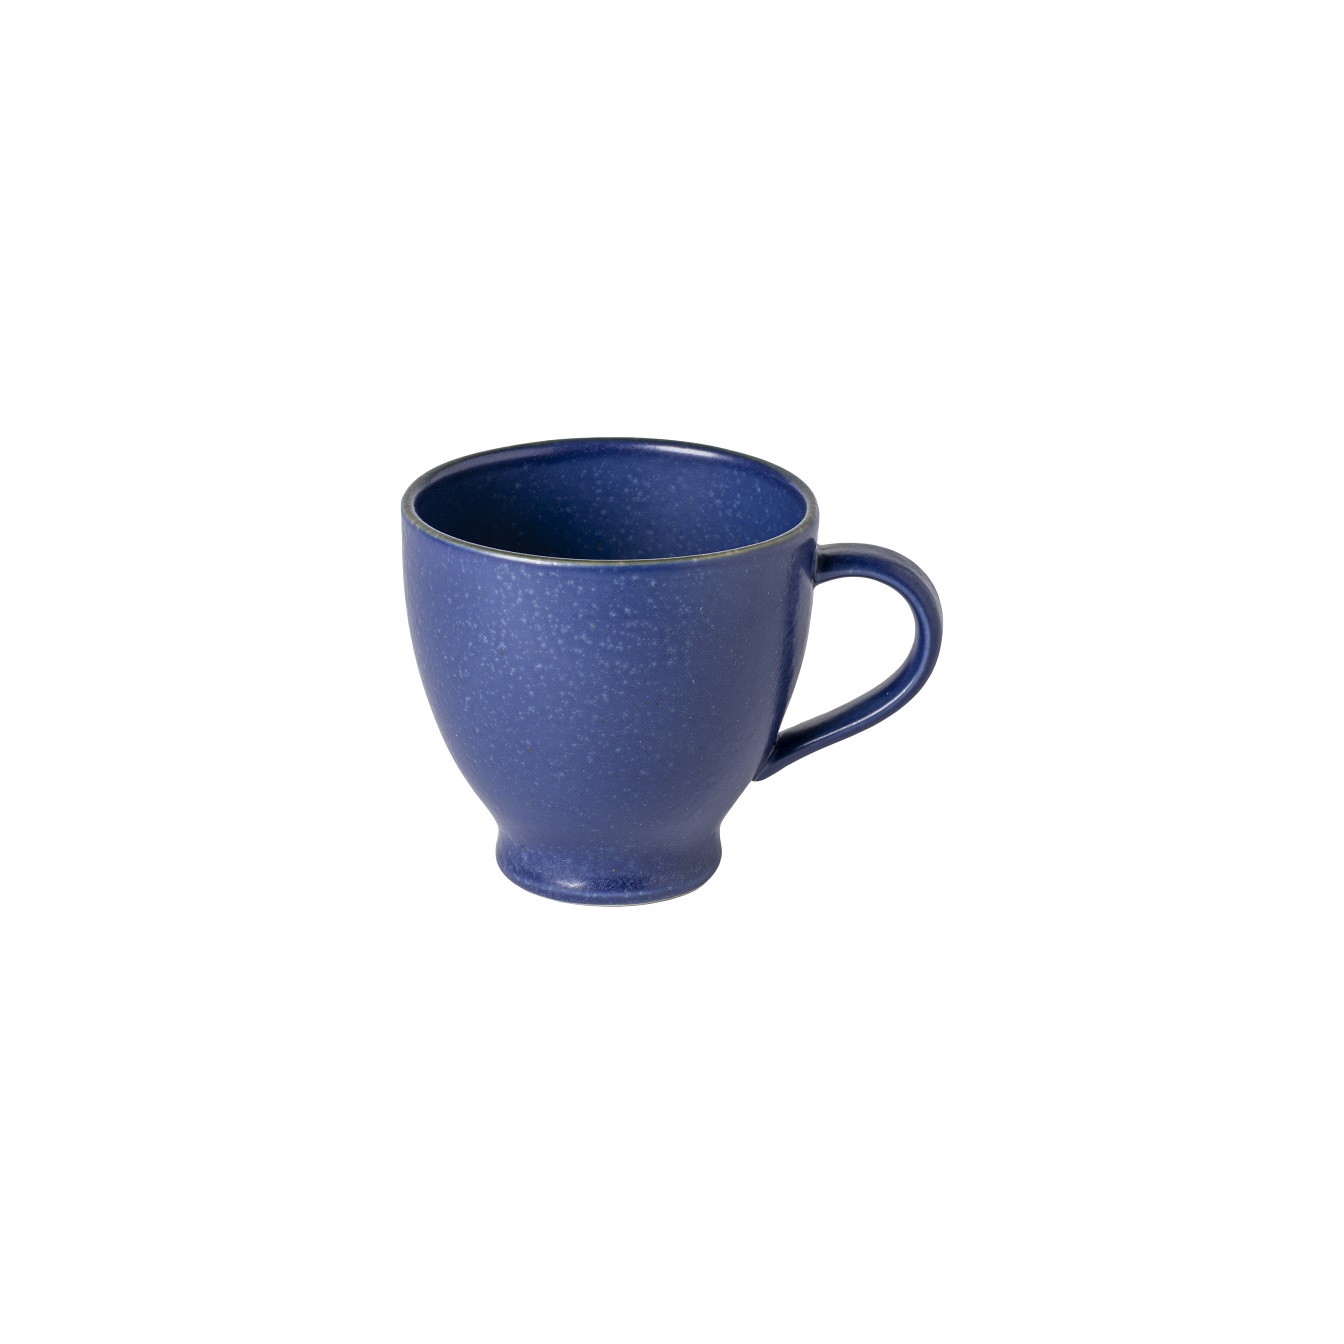 Positano Blue Mug 0.38l Gift